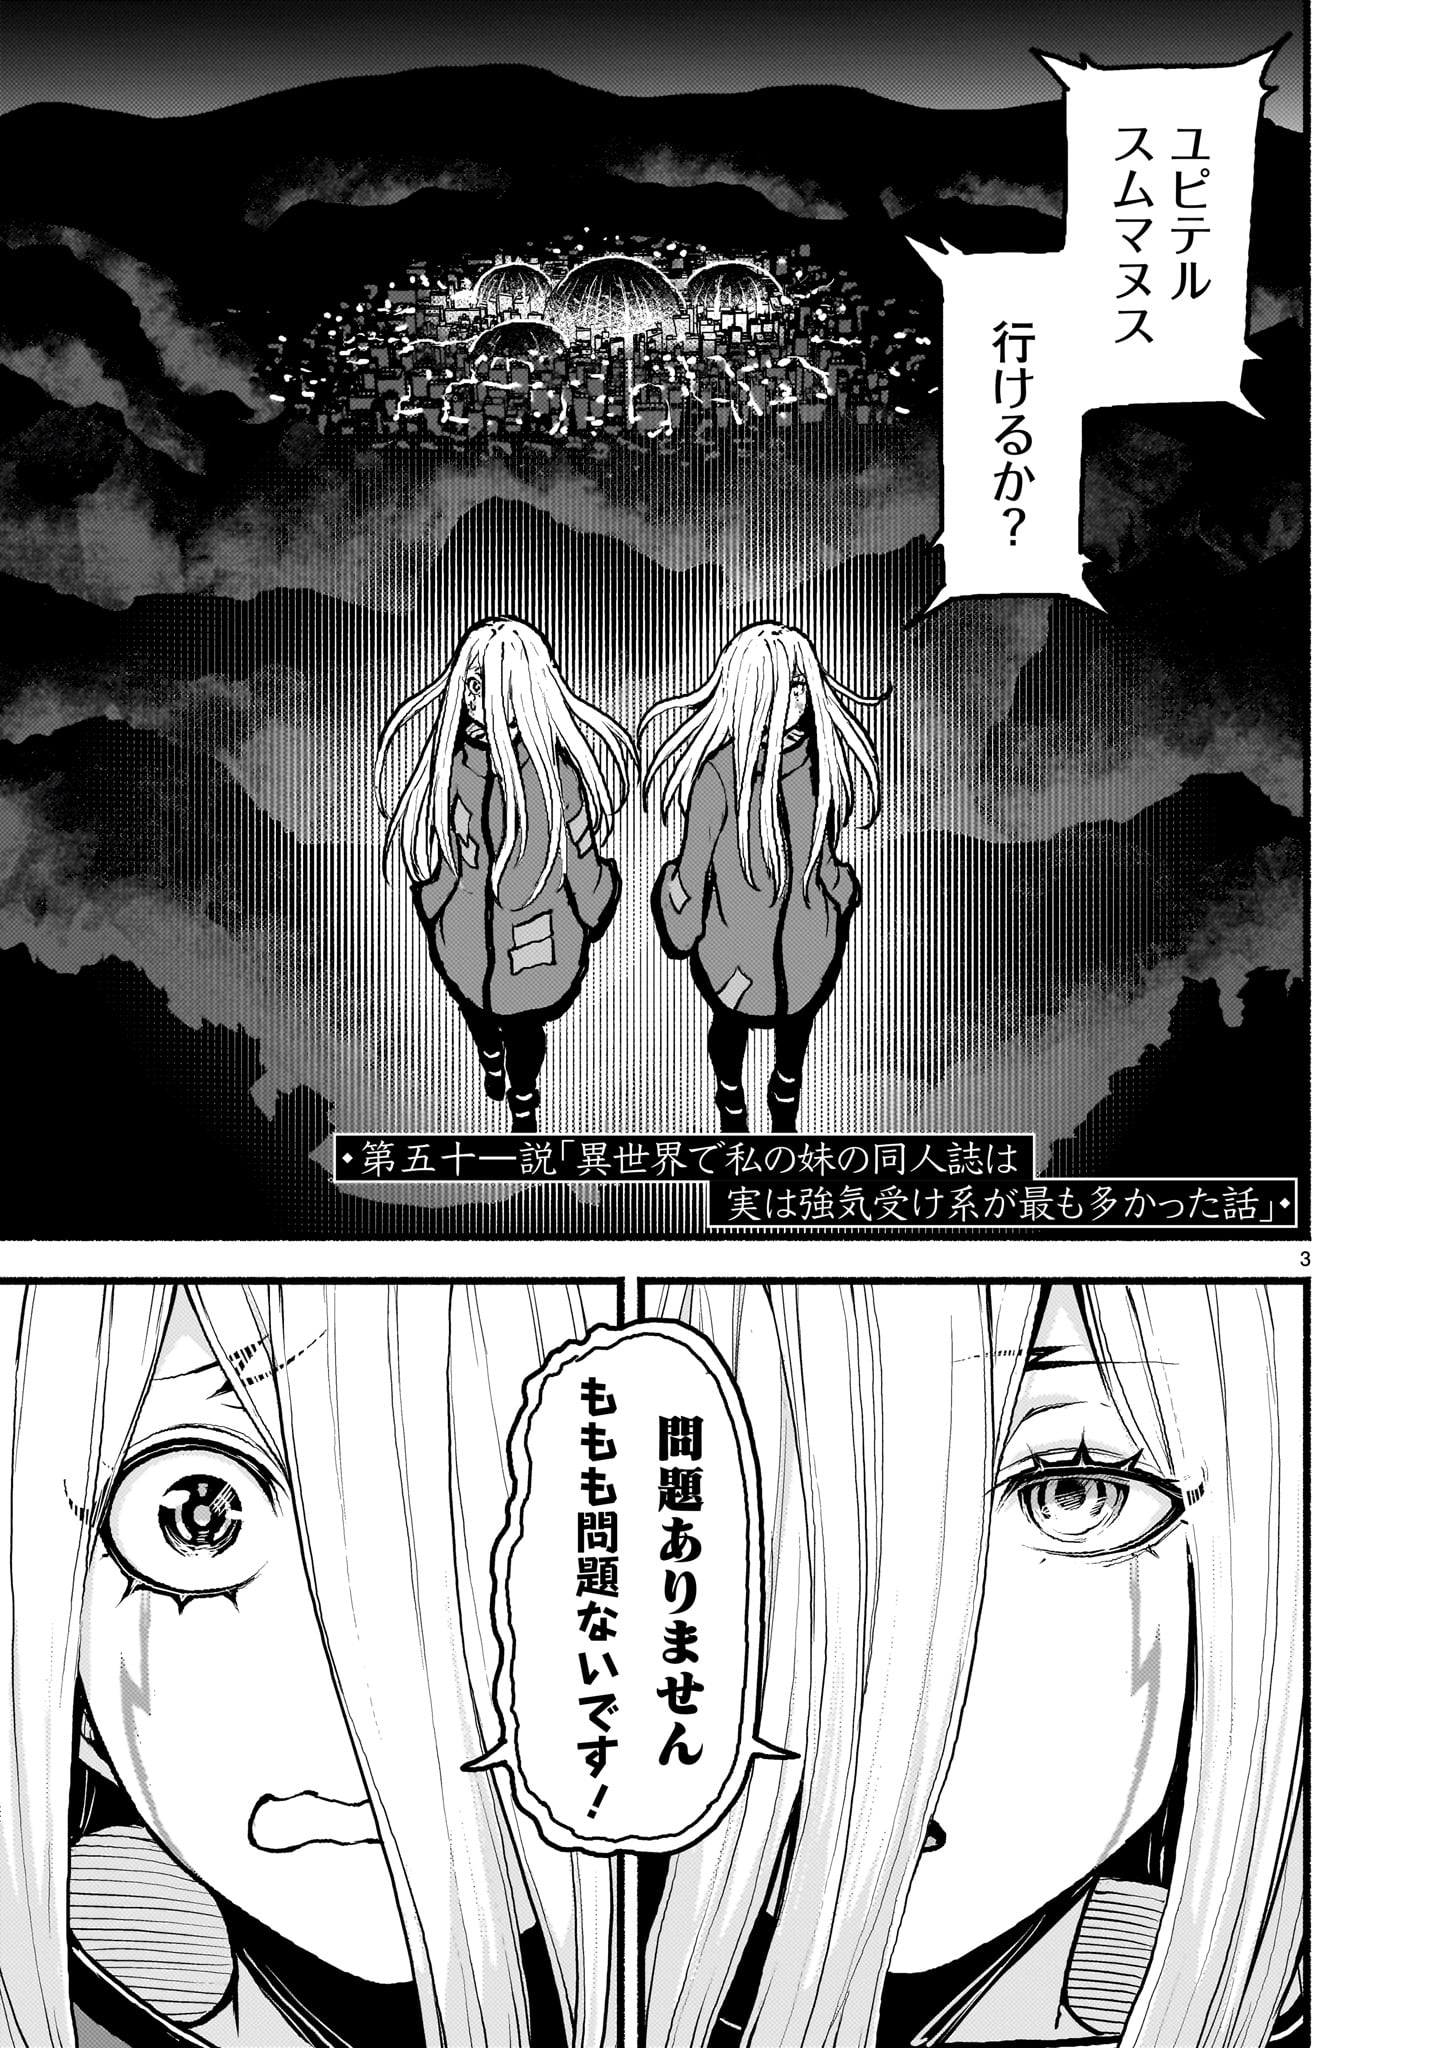 Kaminaki Sekai no Kamisama Katsudou - Chapter 51 - Page 3